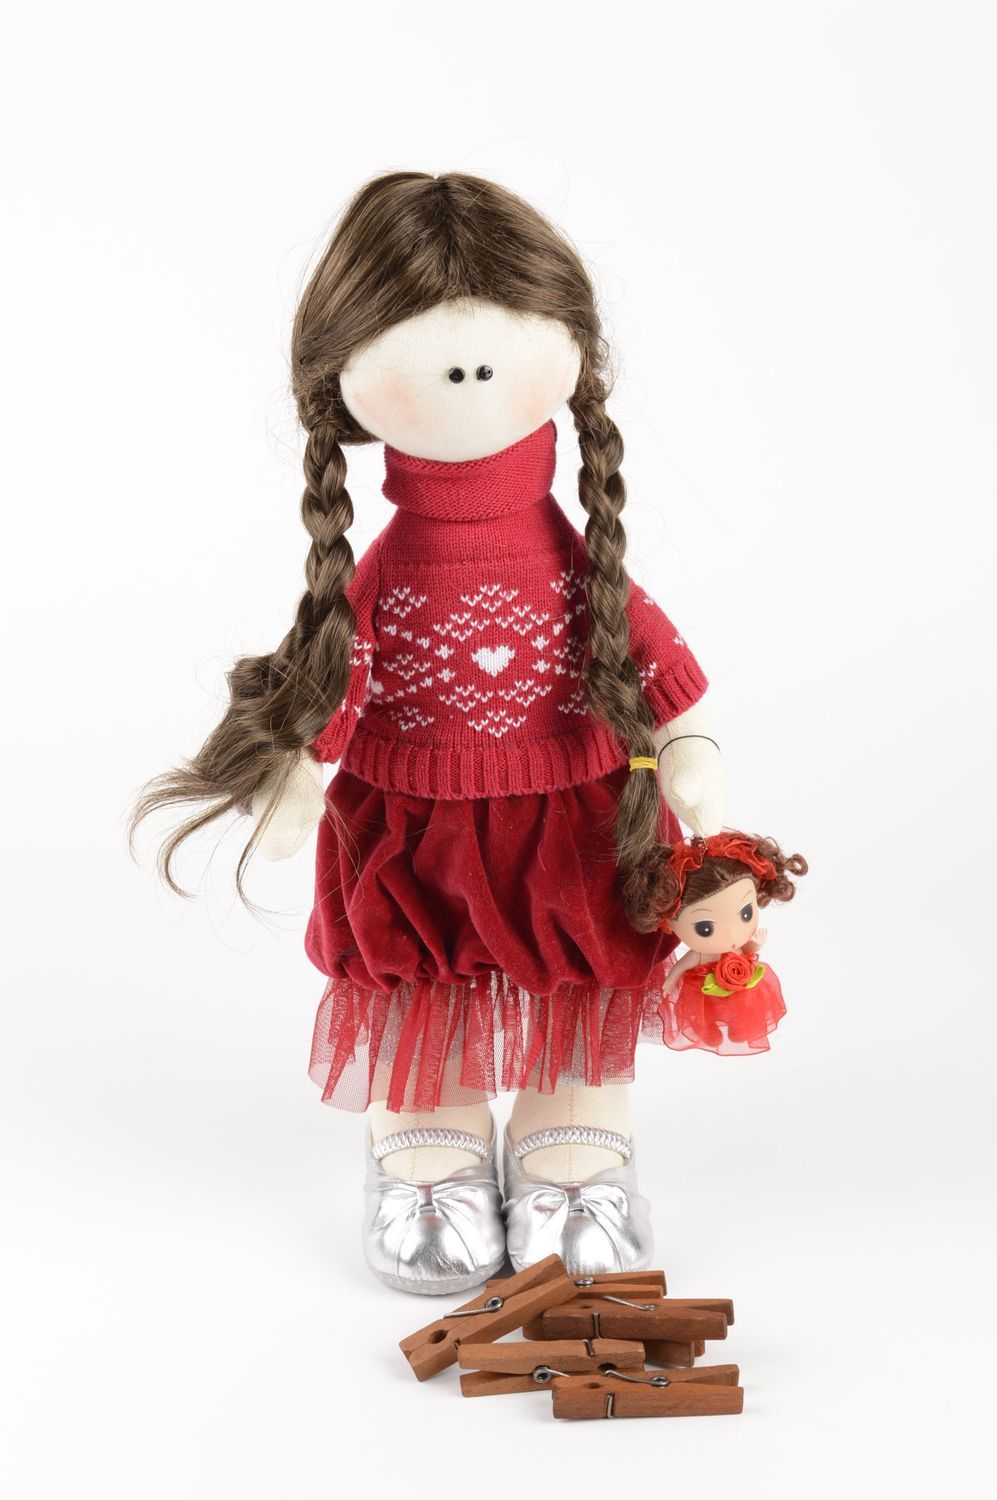 Handmade soft designer doll unusual cute textile doll stylish childrens toy photo 1